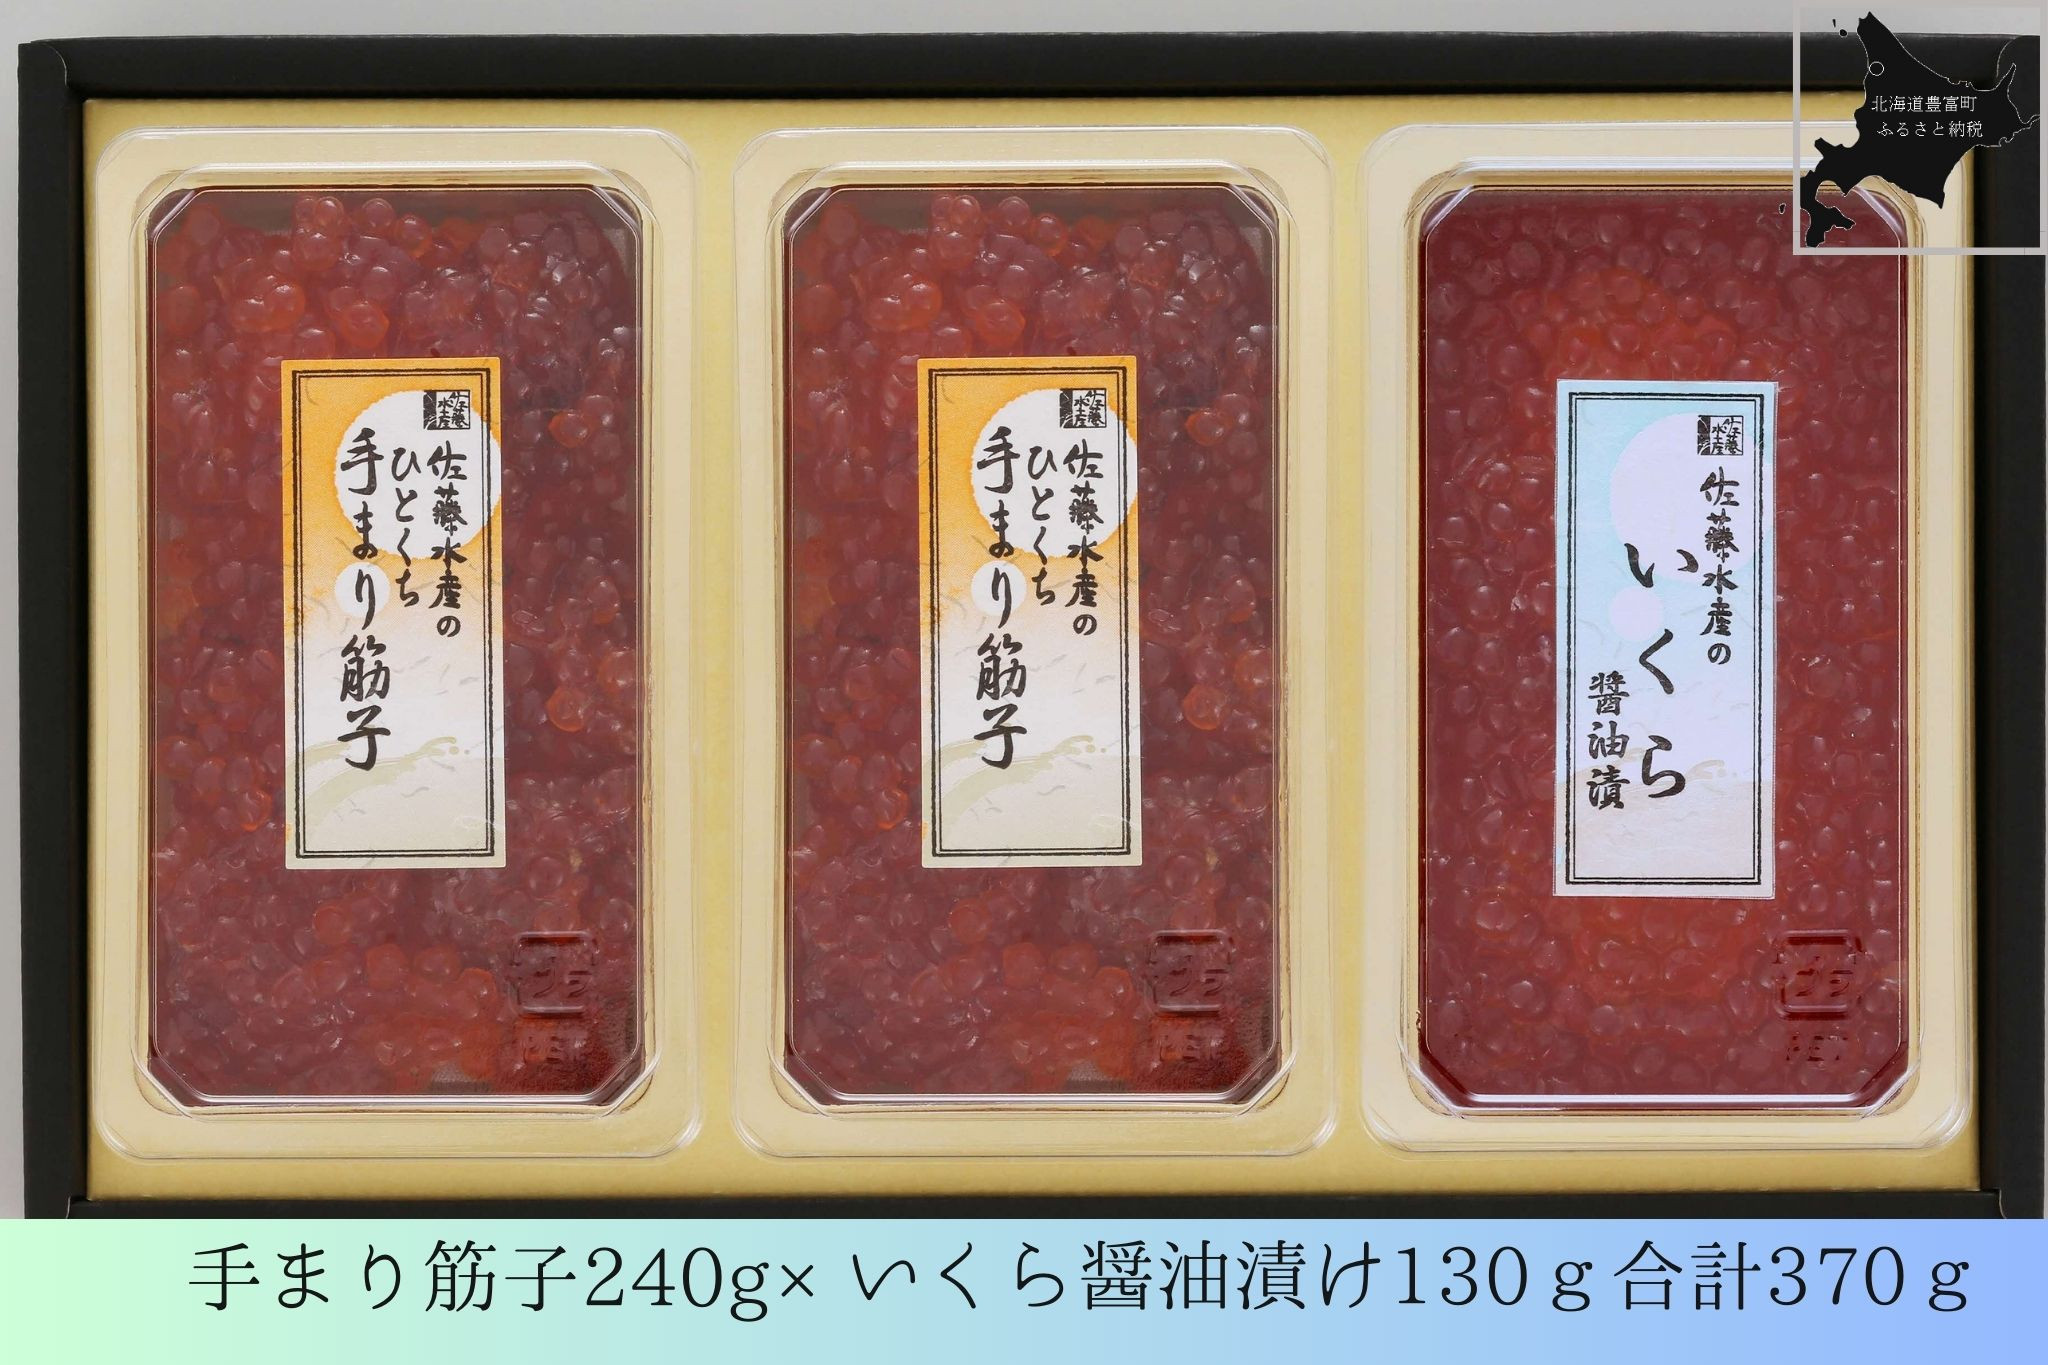 
O-04 佐藤水産の手まり筋子(豊富産)と鮭の魚醤入りいくら醤油漬け【KAT-302】
